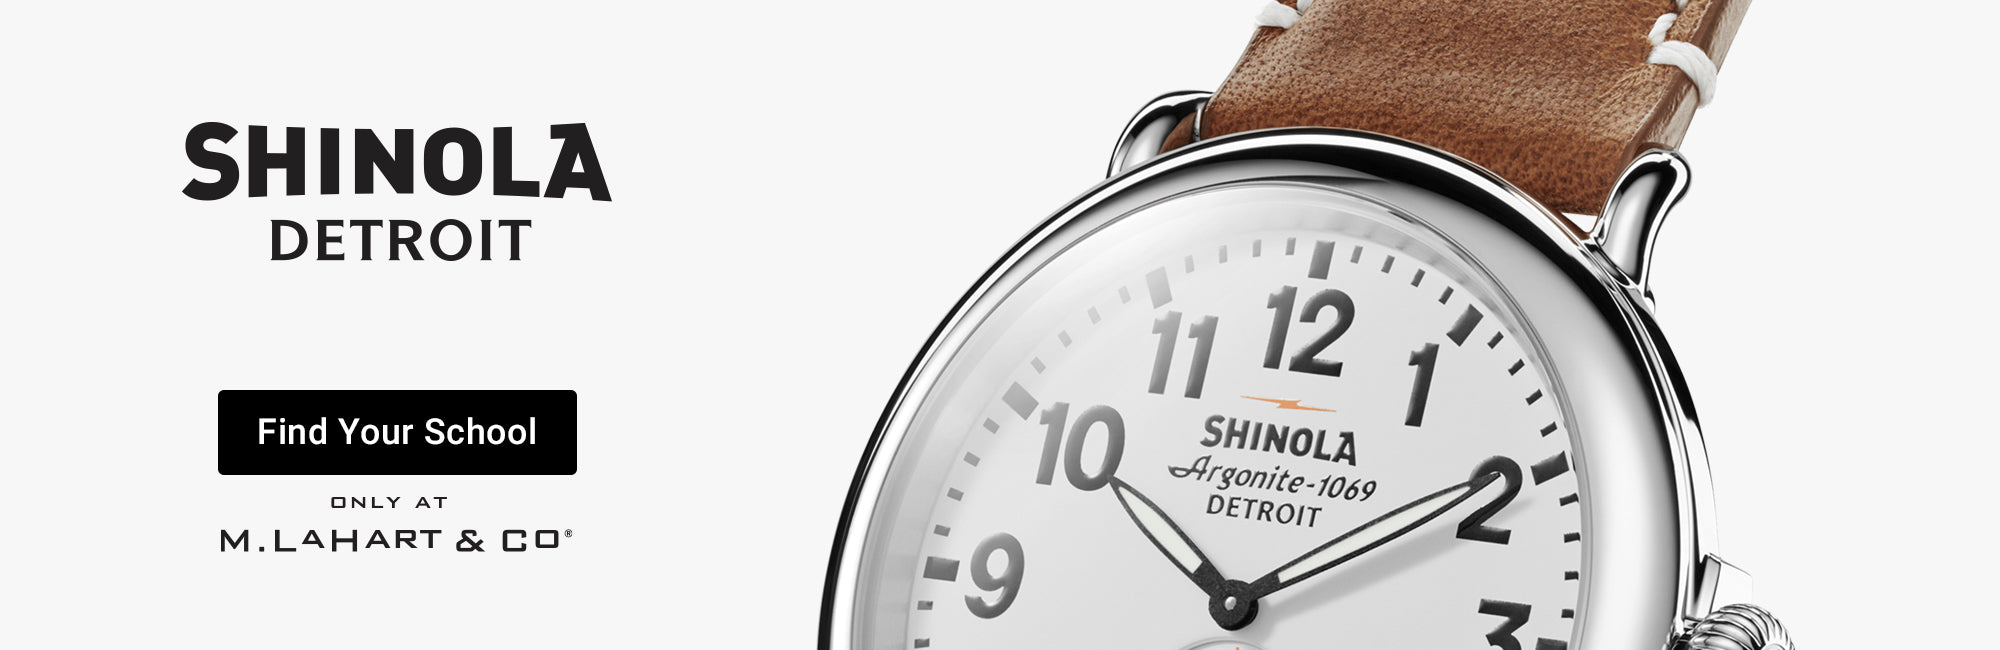 Shinola College Watches | M.LaHart & Co.